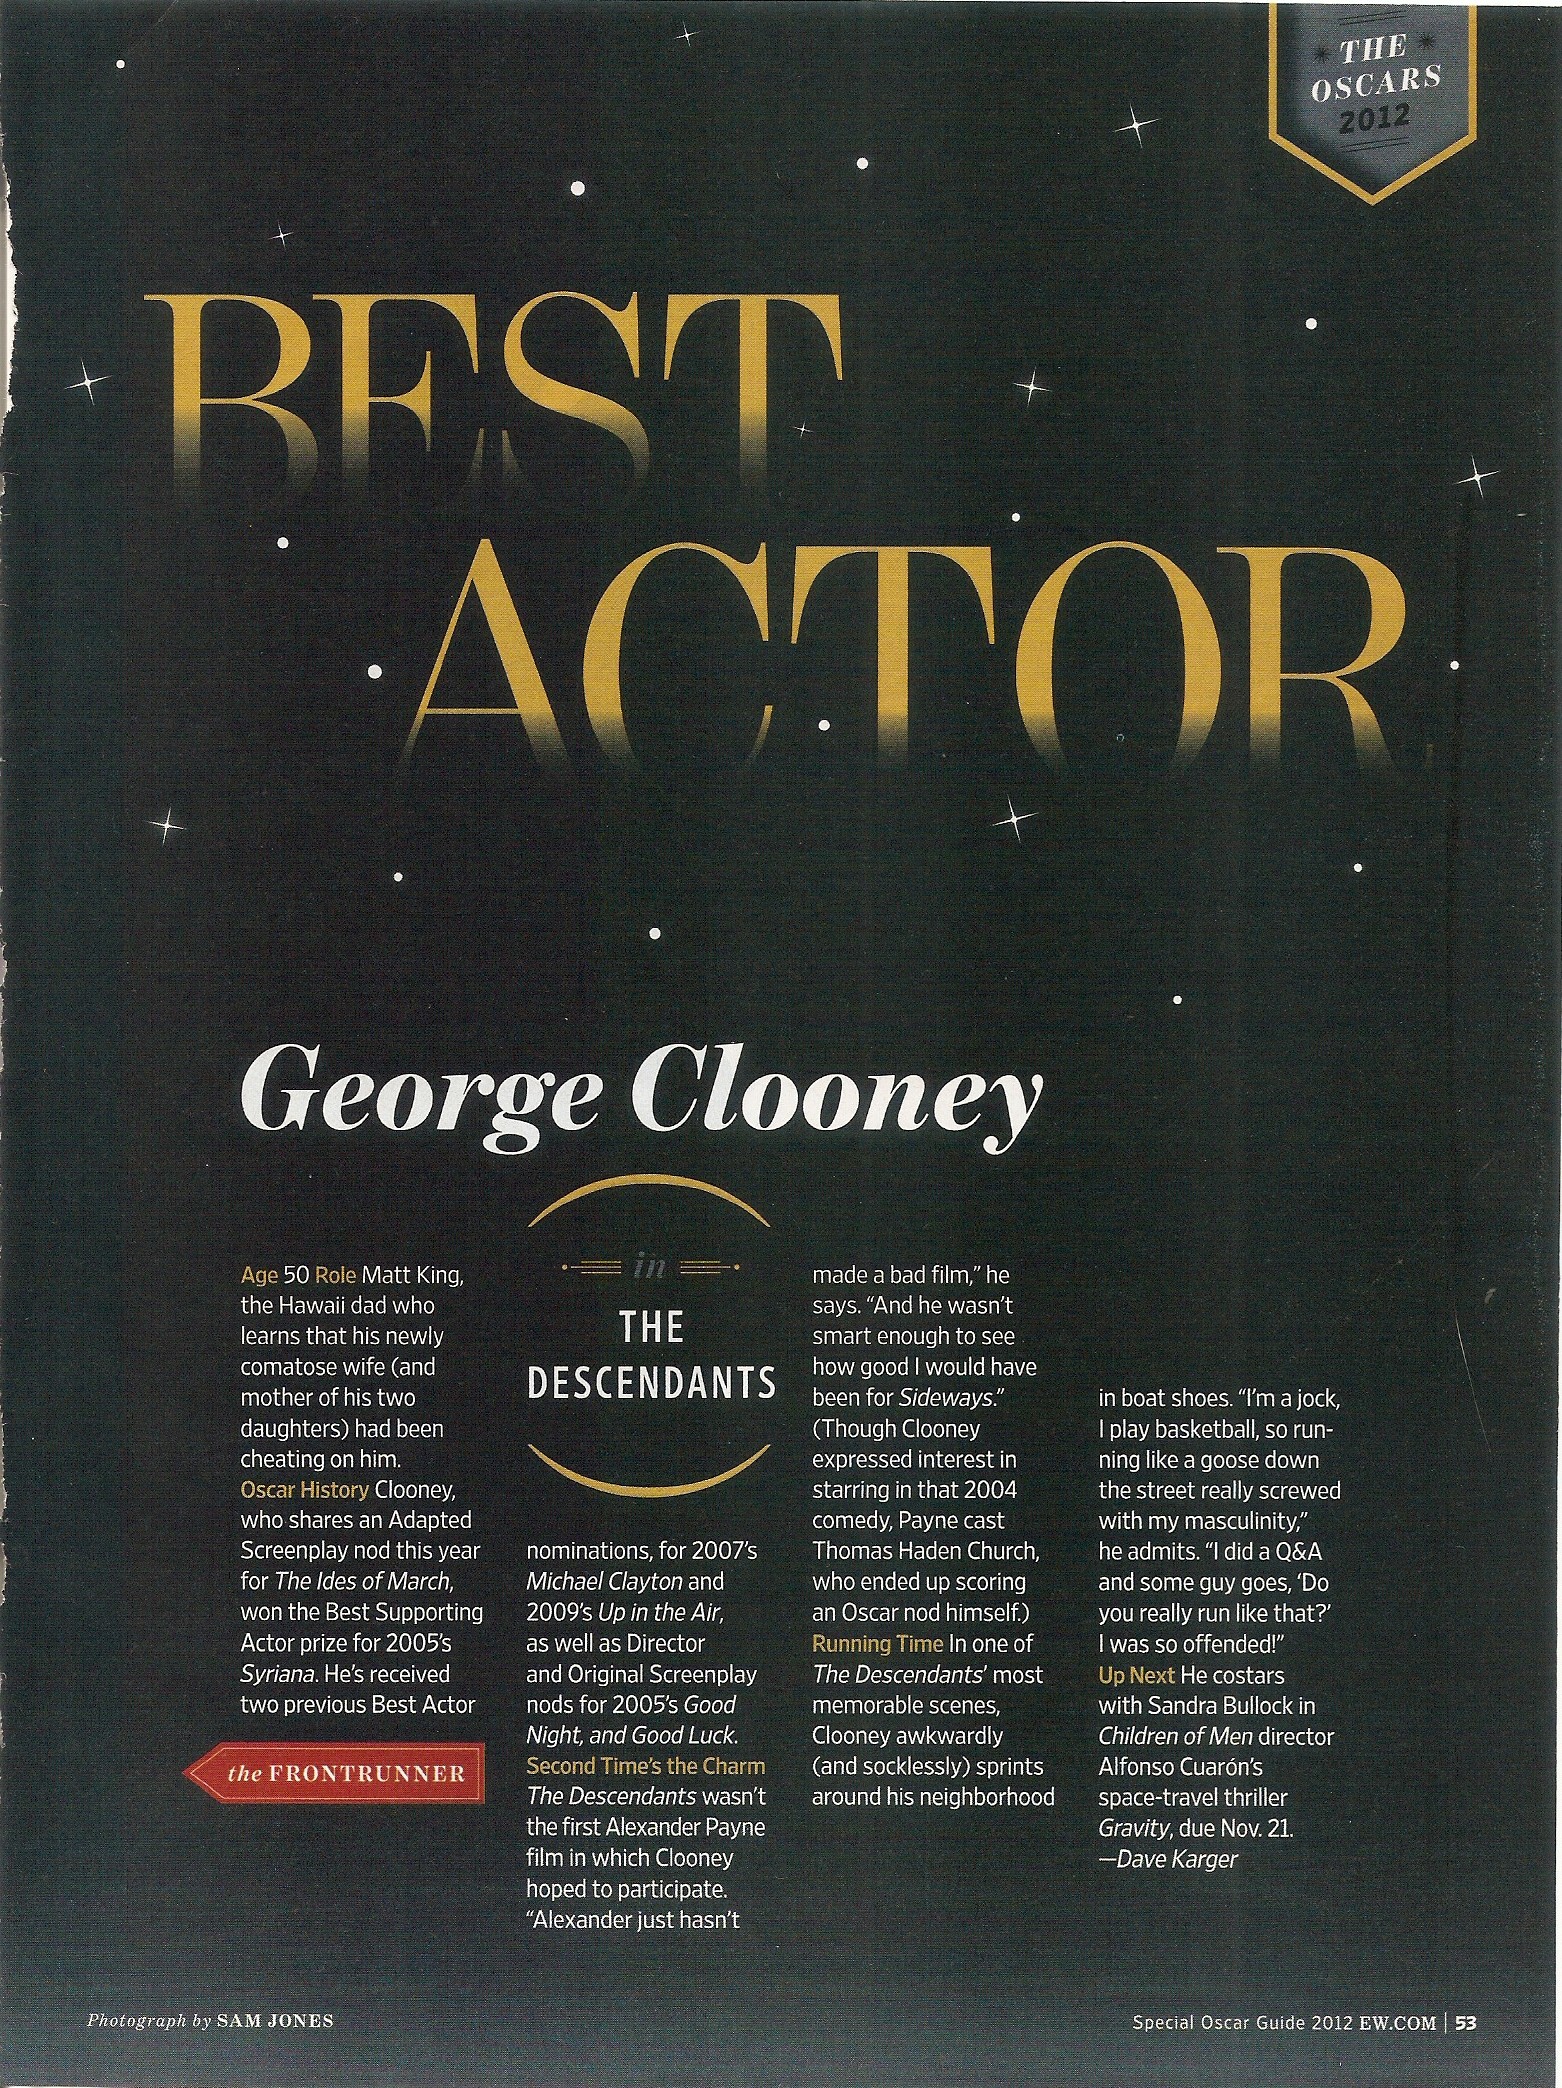 George Clooney - Entertainment Weekly